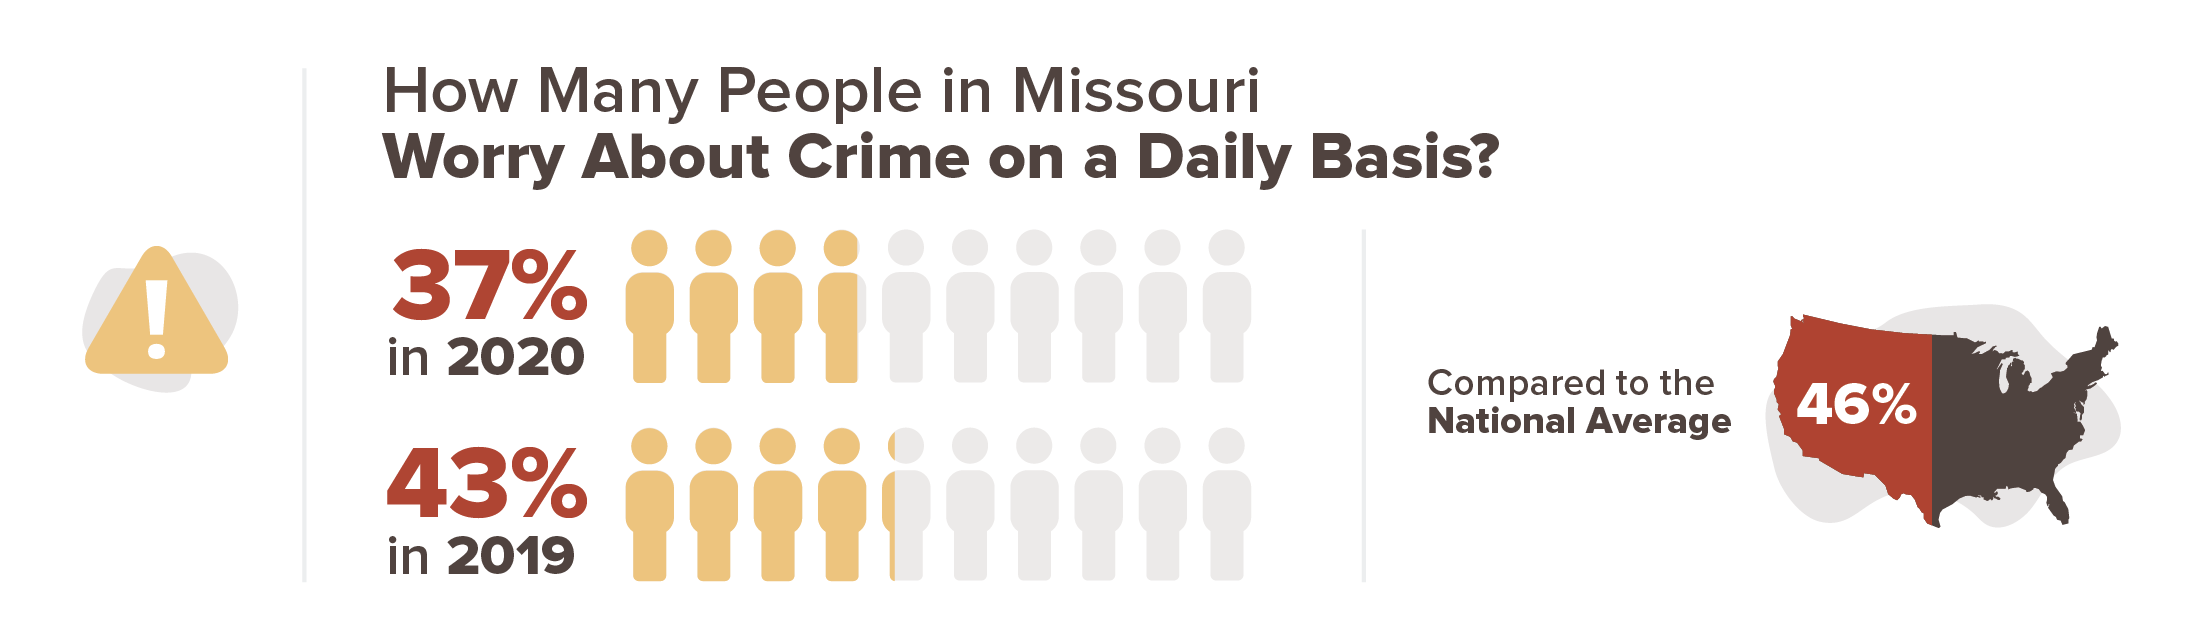 Missouri crime concern infographic